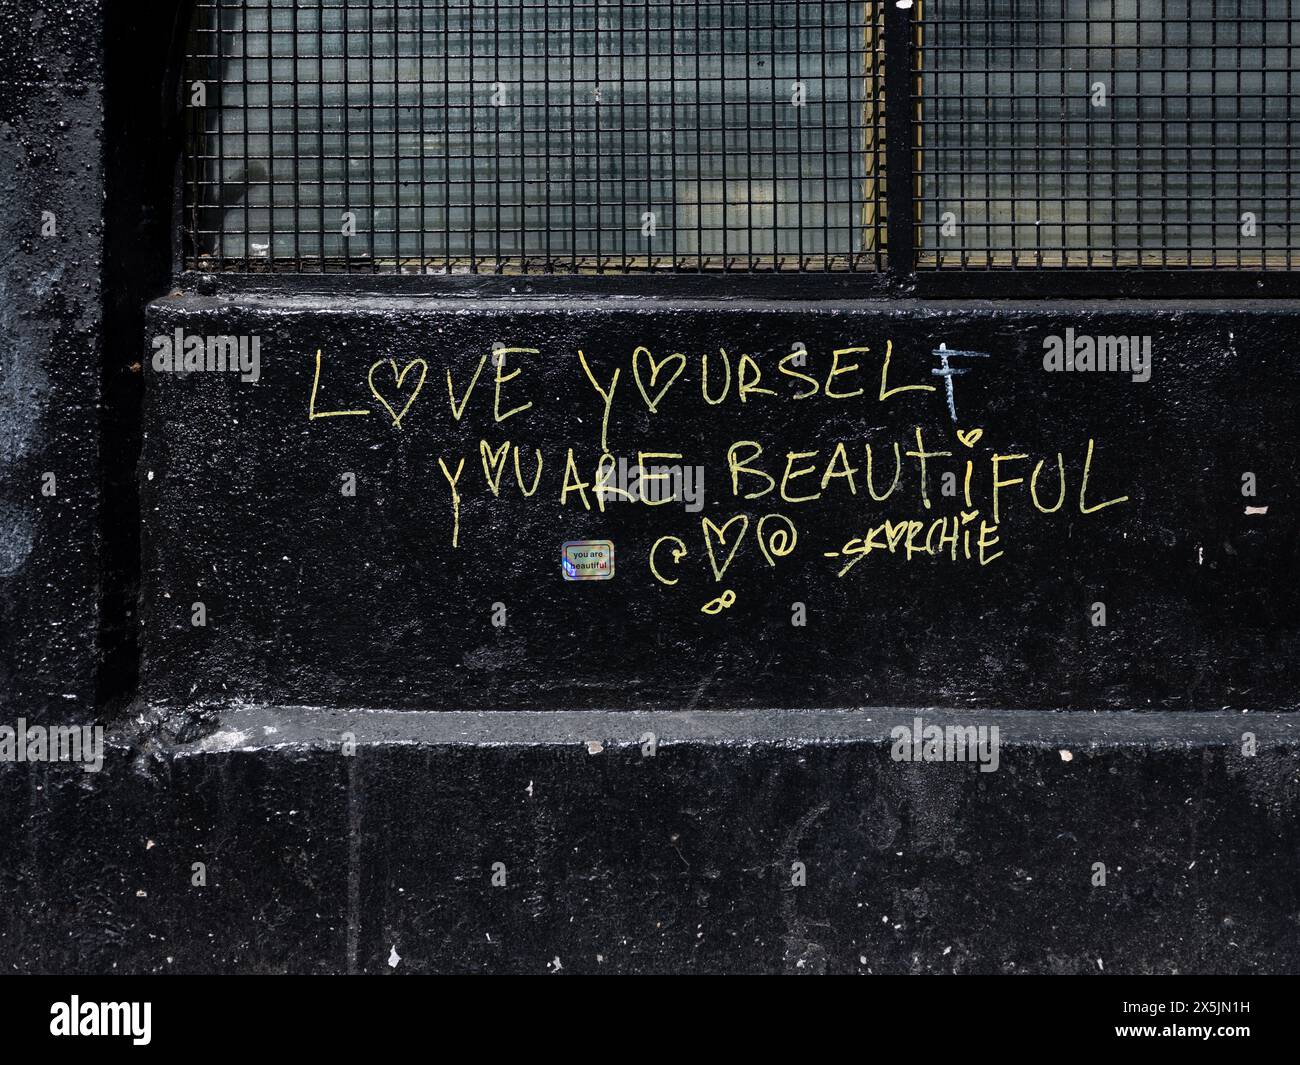 Grafitti on wall in Dublin city, Ireland reading ' Love youself, you are beautiful'. Stock Photo